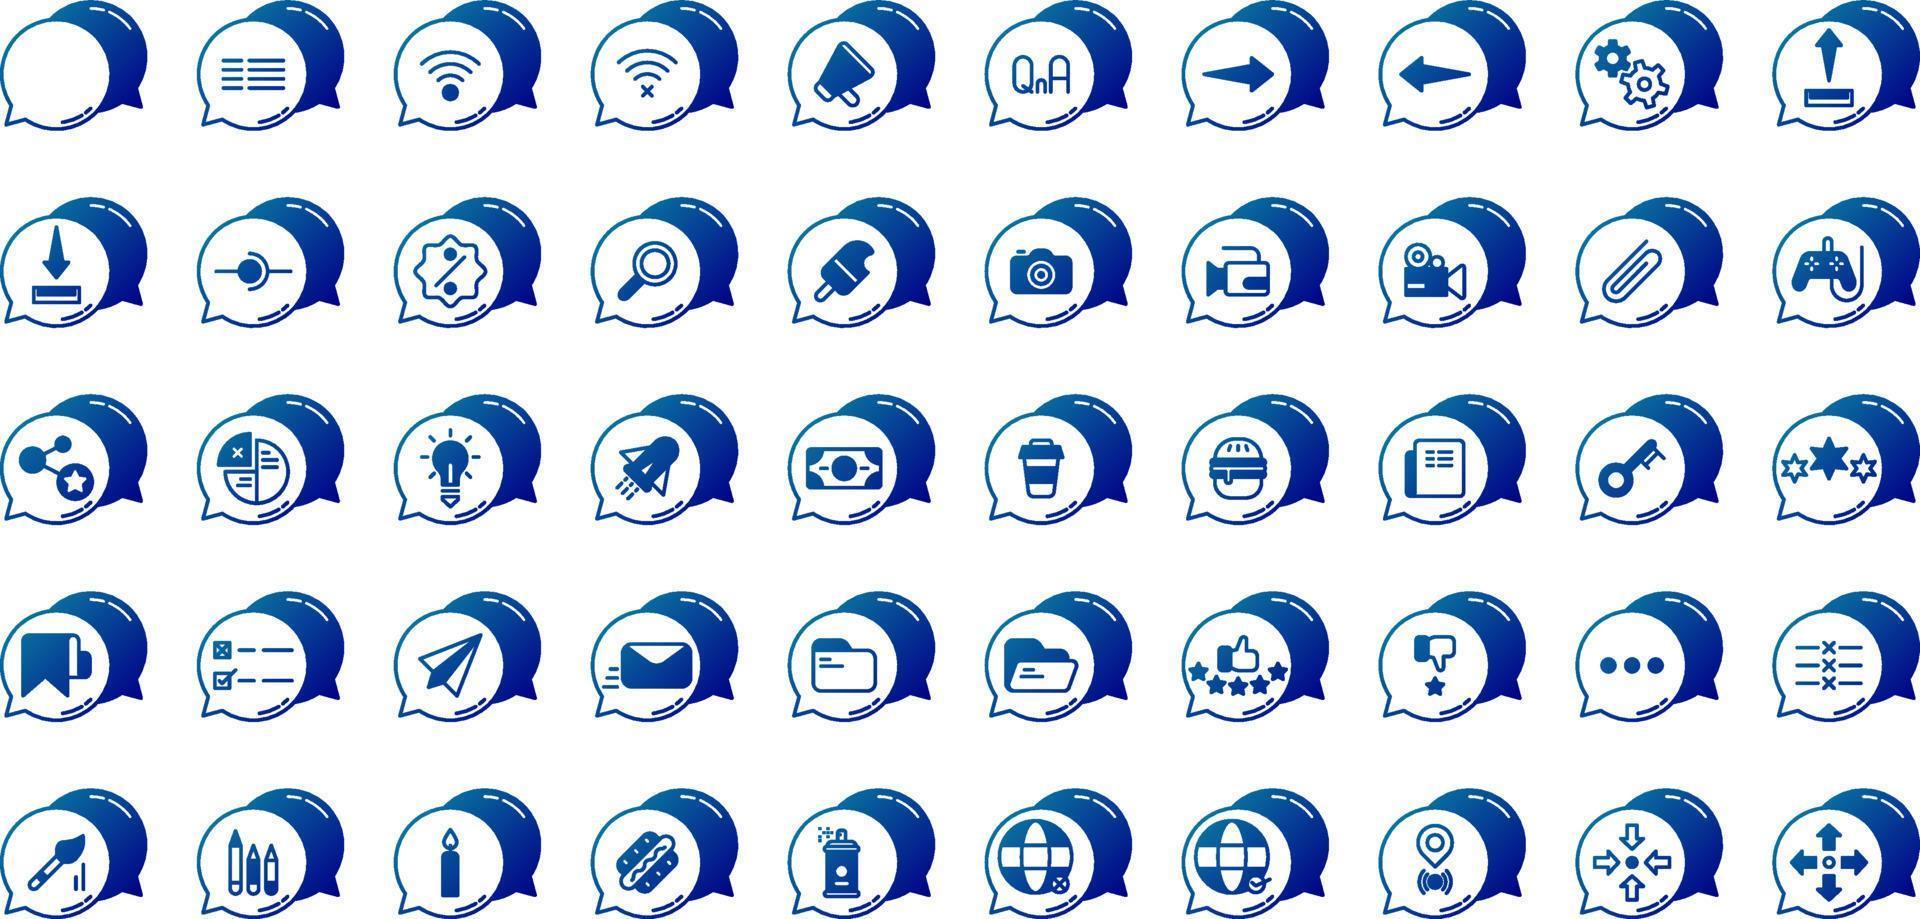 conjunto de globos de voz e iconos de herramientas sobre fondo transparente vector